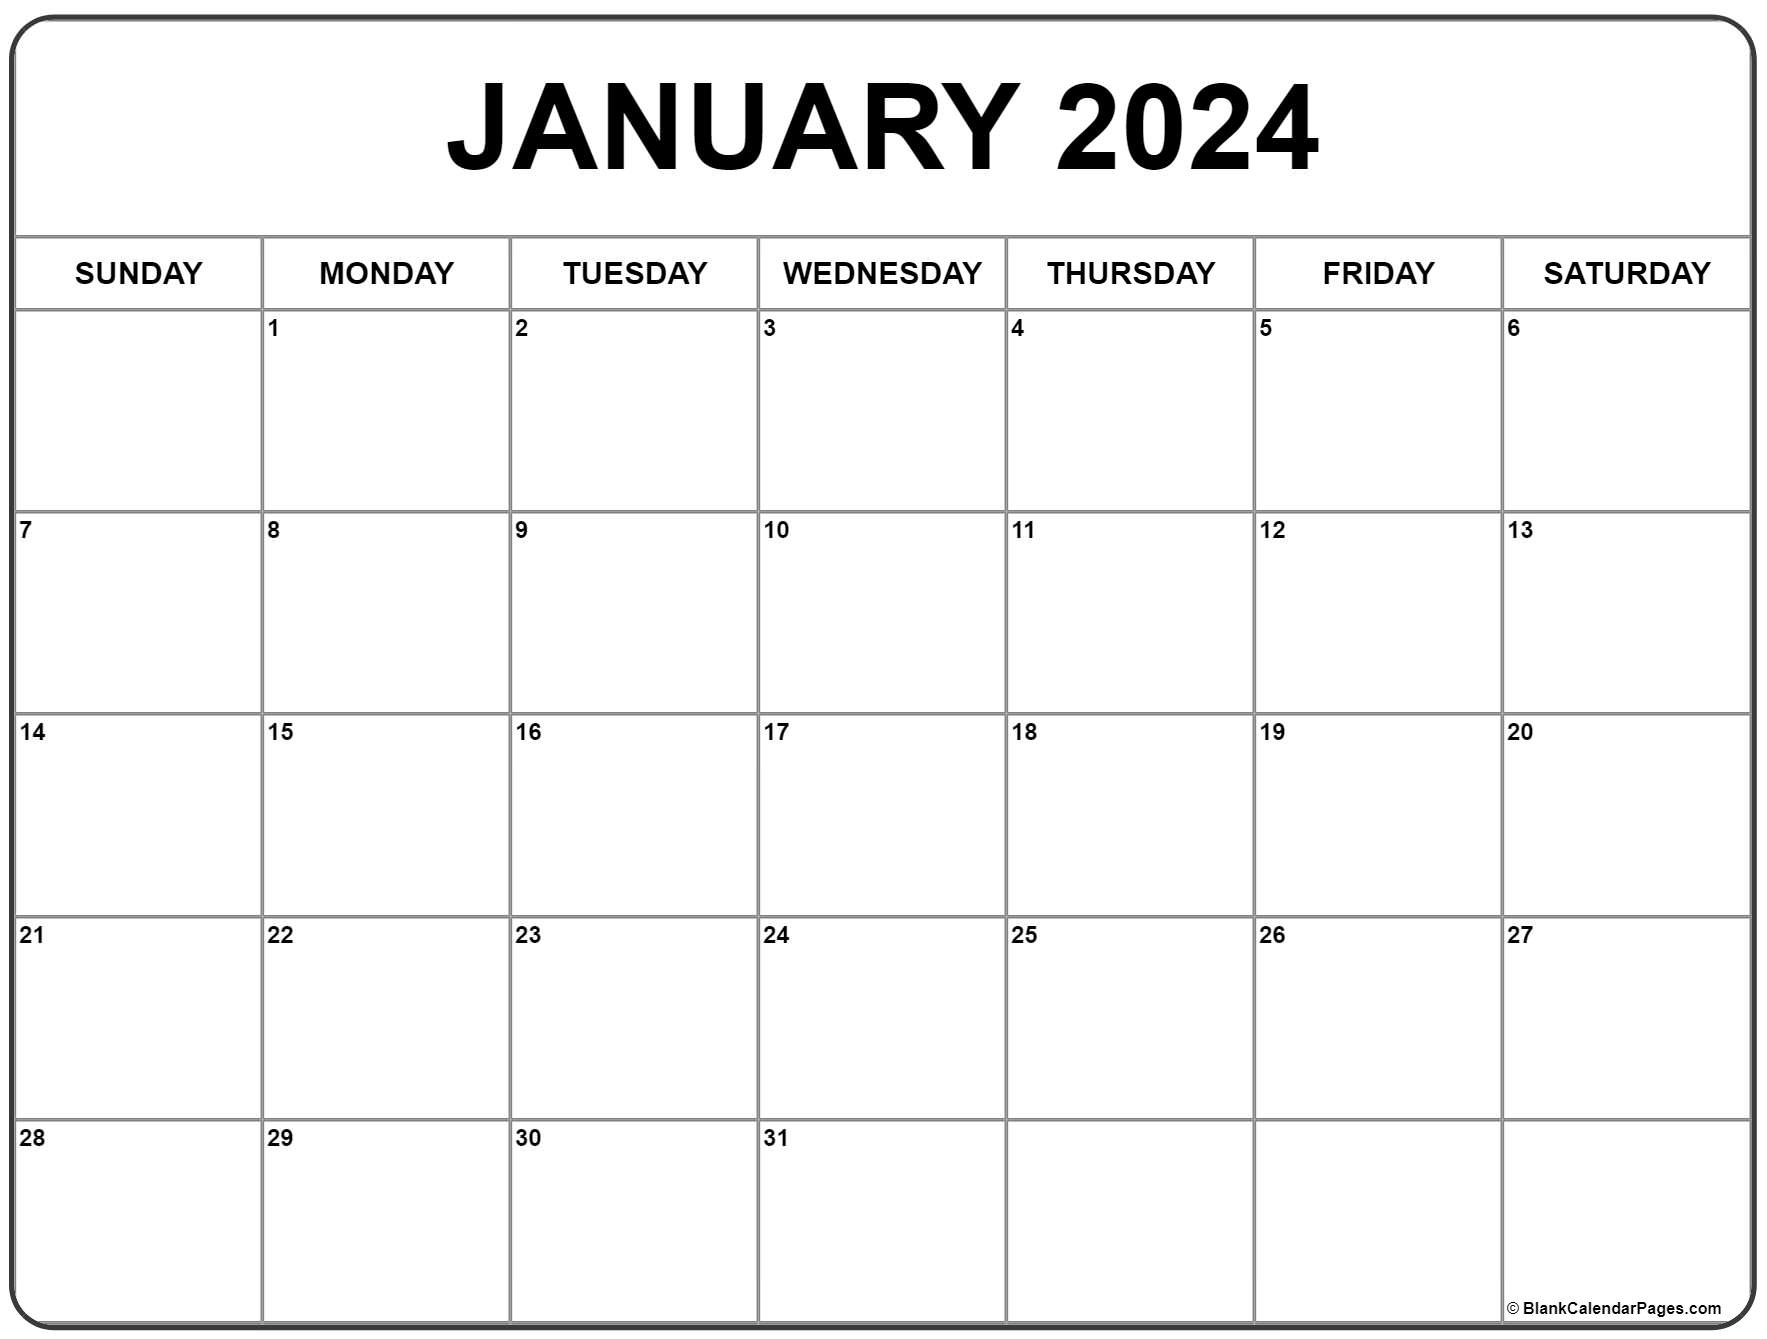 January 2024 Calendar | Free Printable Calendar for Free January 2024 Calendar Printable